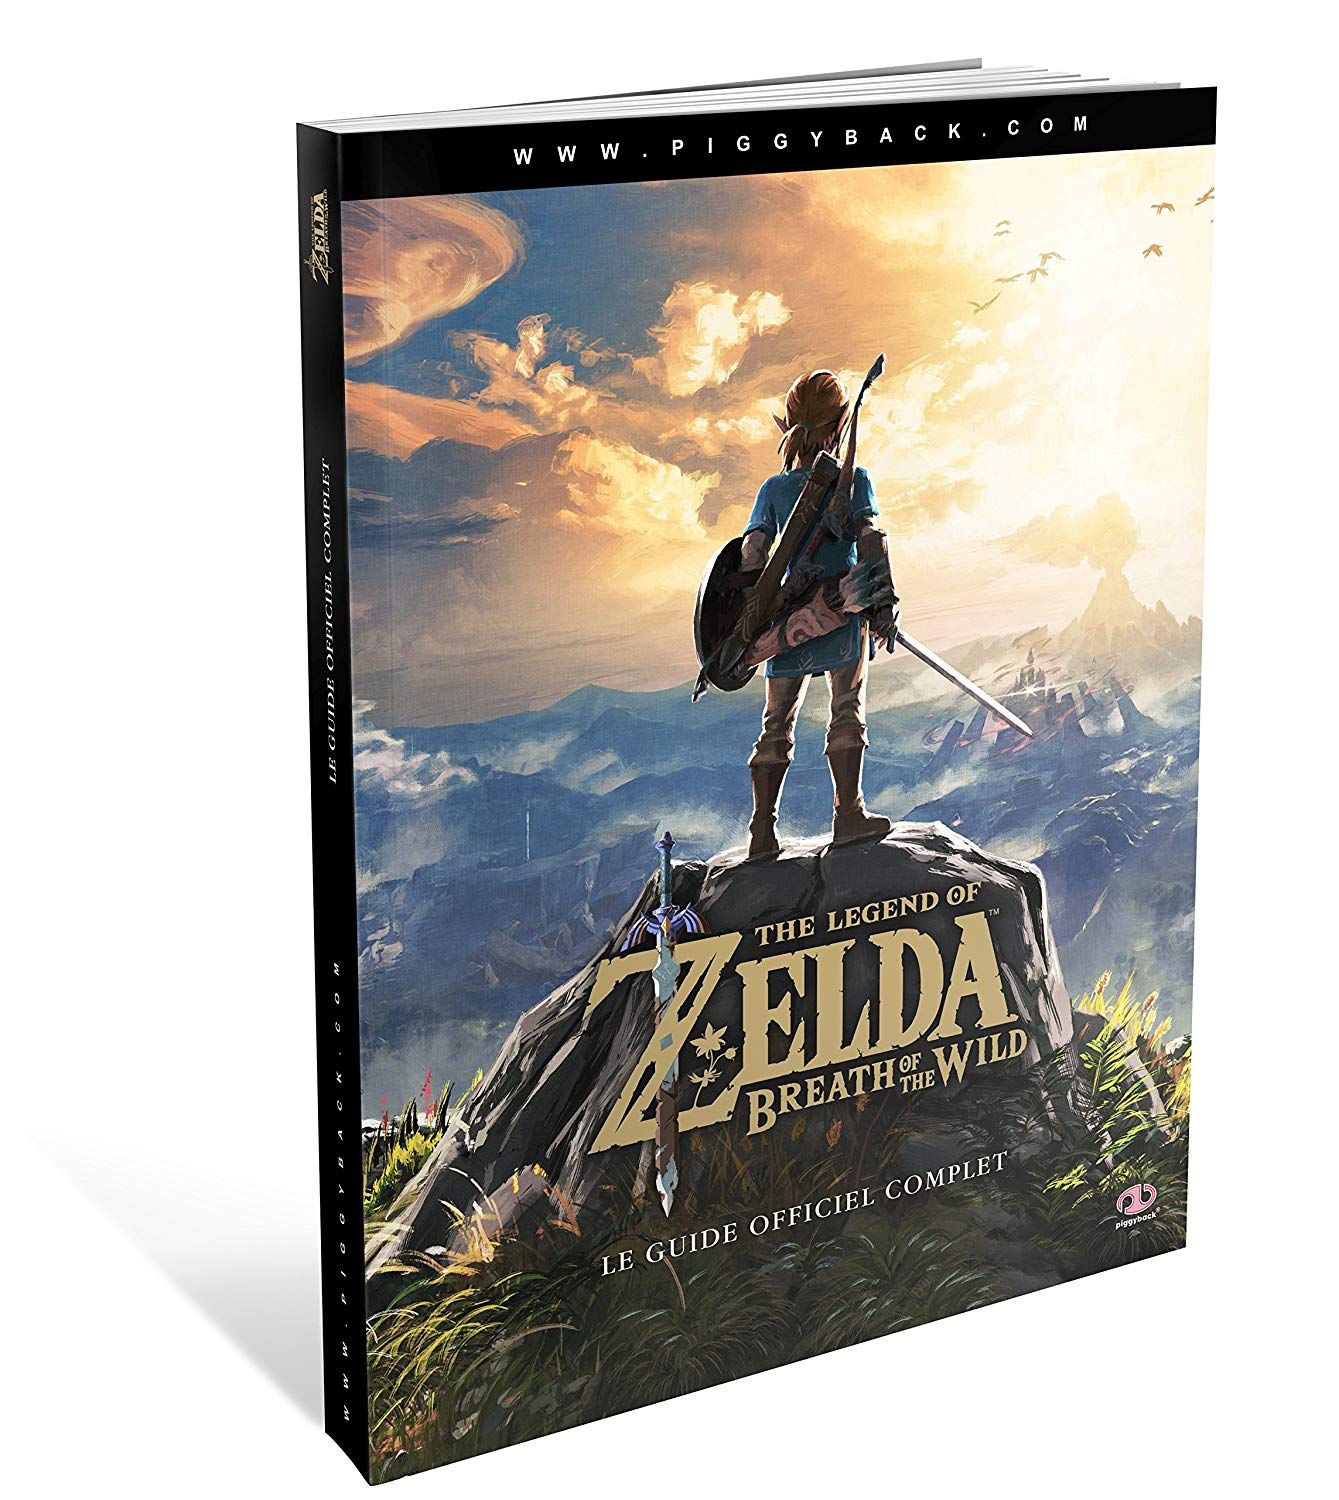 Guide Officiel Zelda Breath of the wild